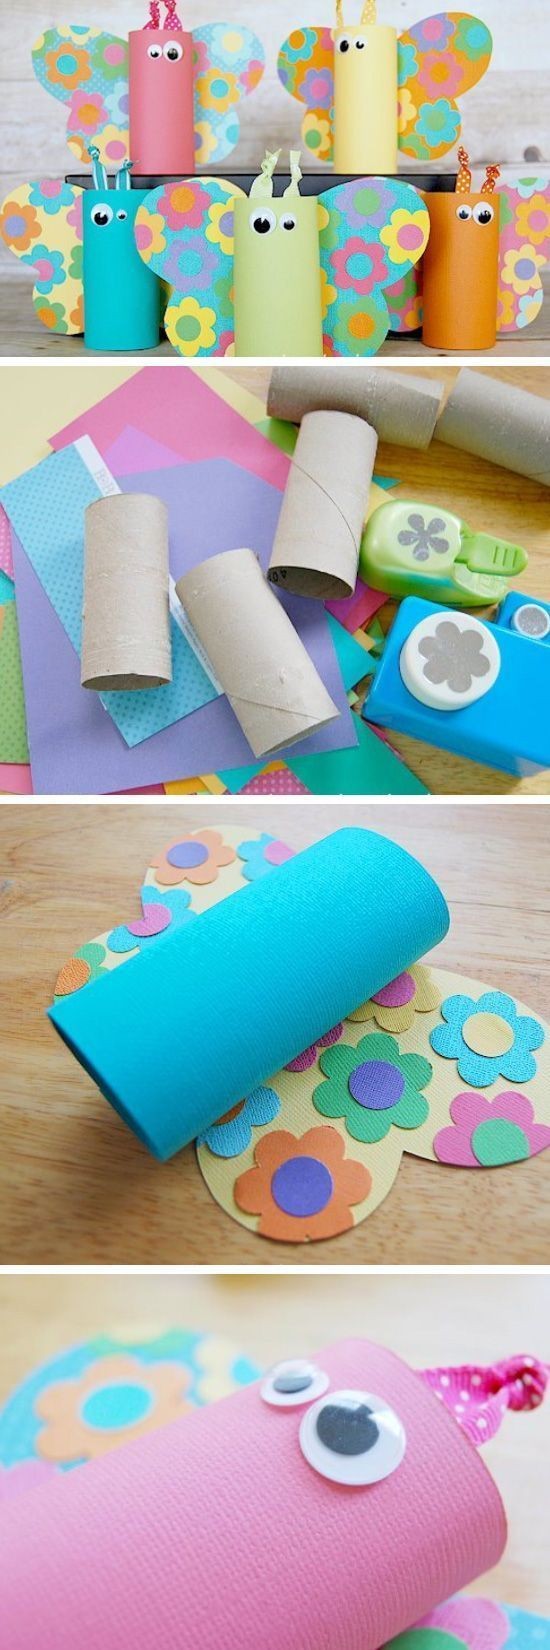 Papercraft Ideas for Children 320 Best Crafts for Kids Images On Pinterest